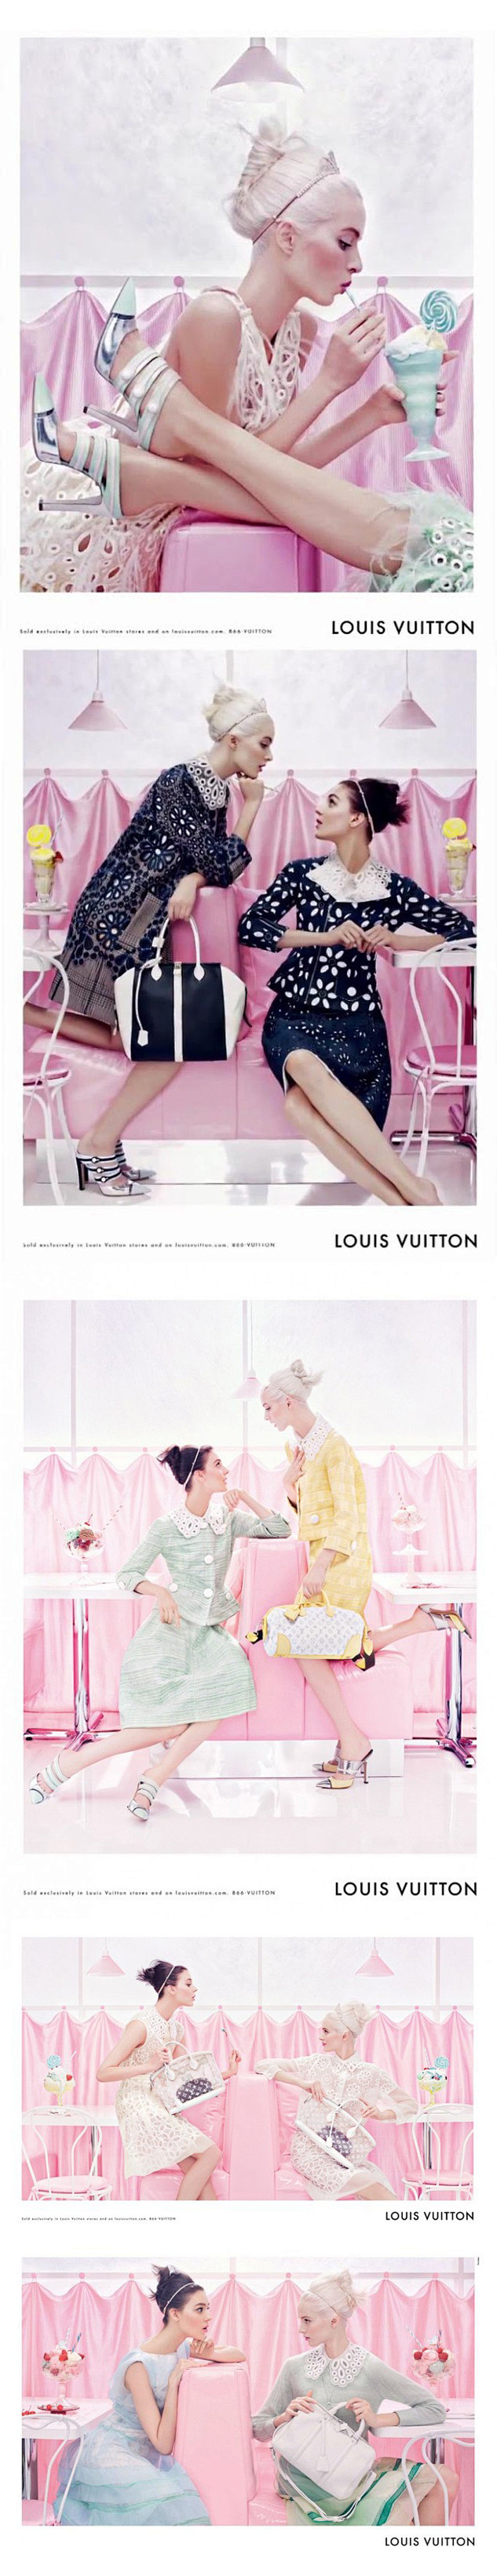 Louis Vuitton’s Spri...